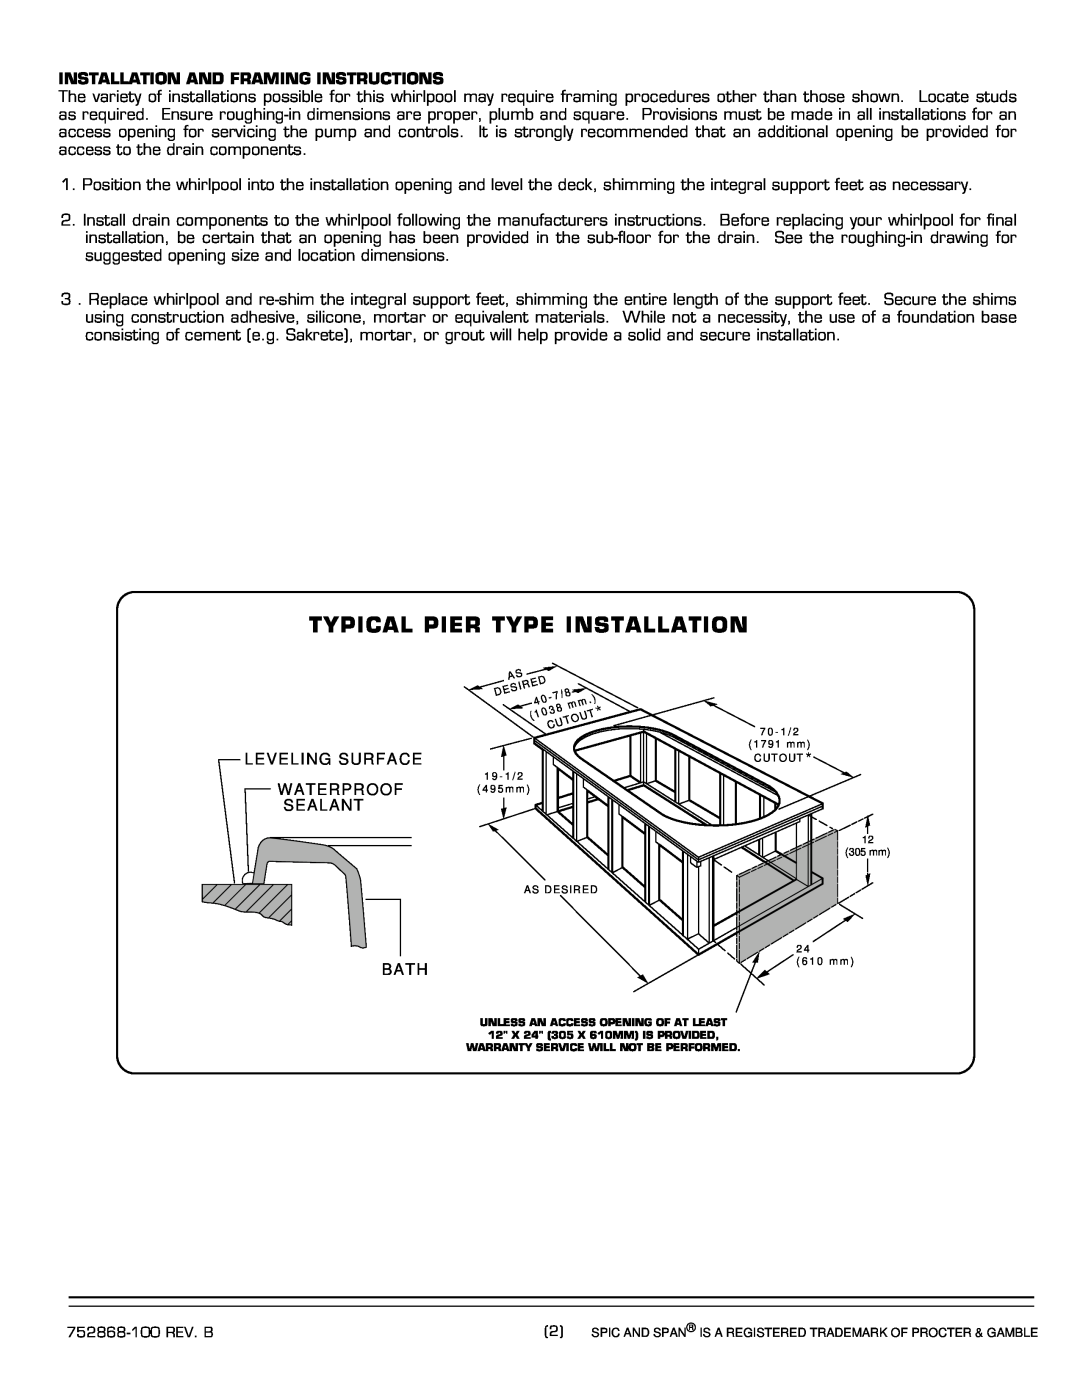 American Standard 7242E installation instructions Typical Pier Type Installation, Installation And Framing Instructions 